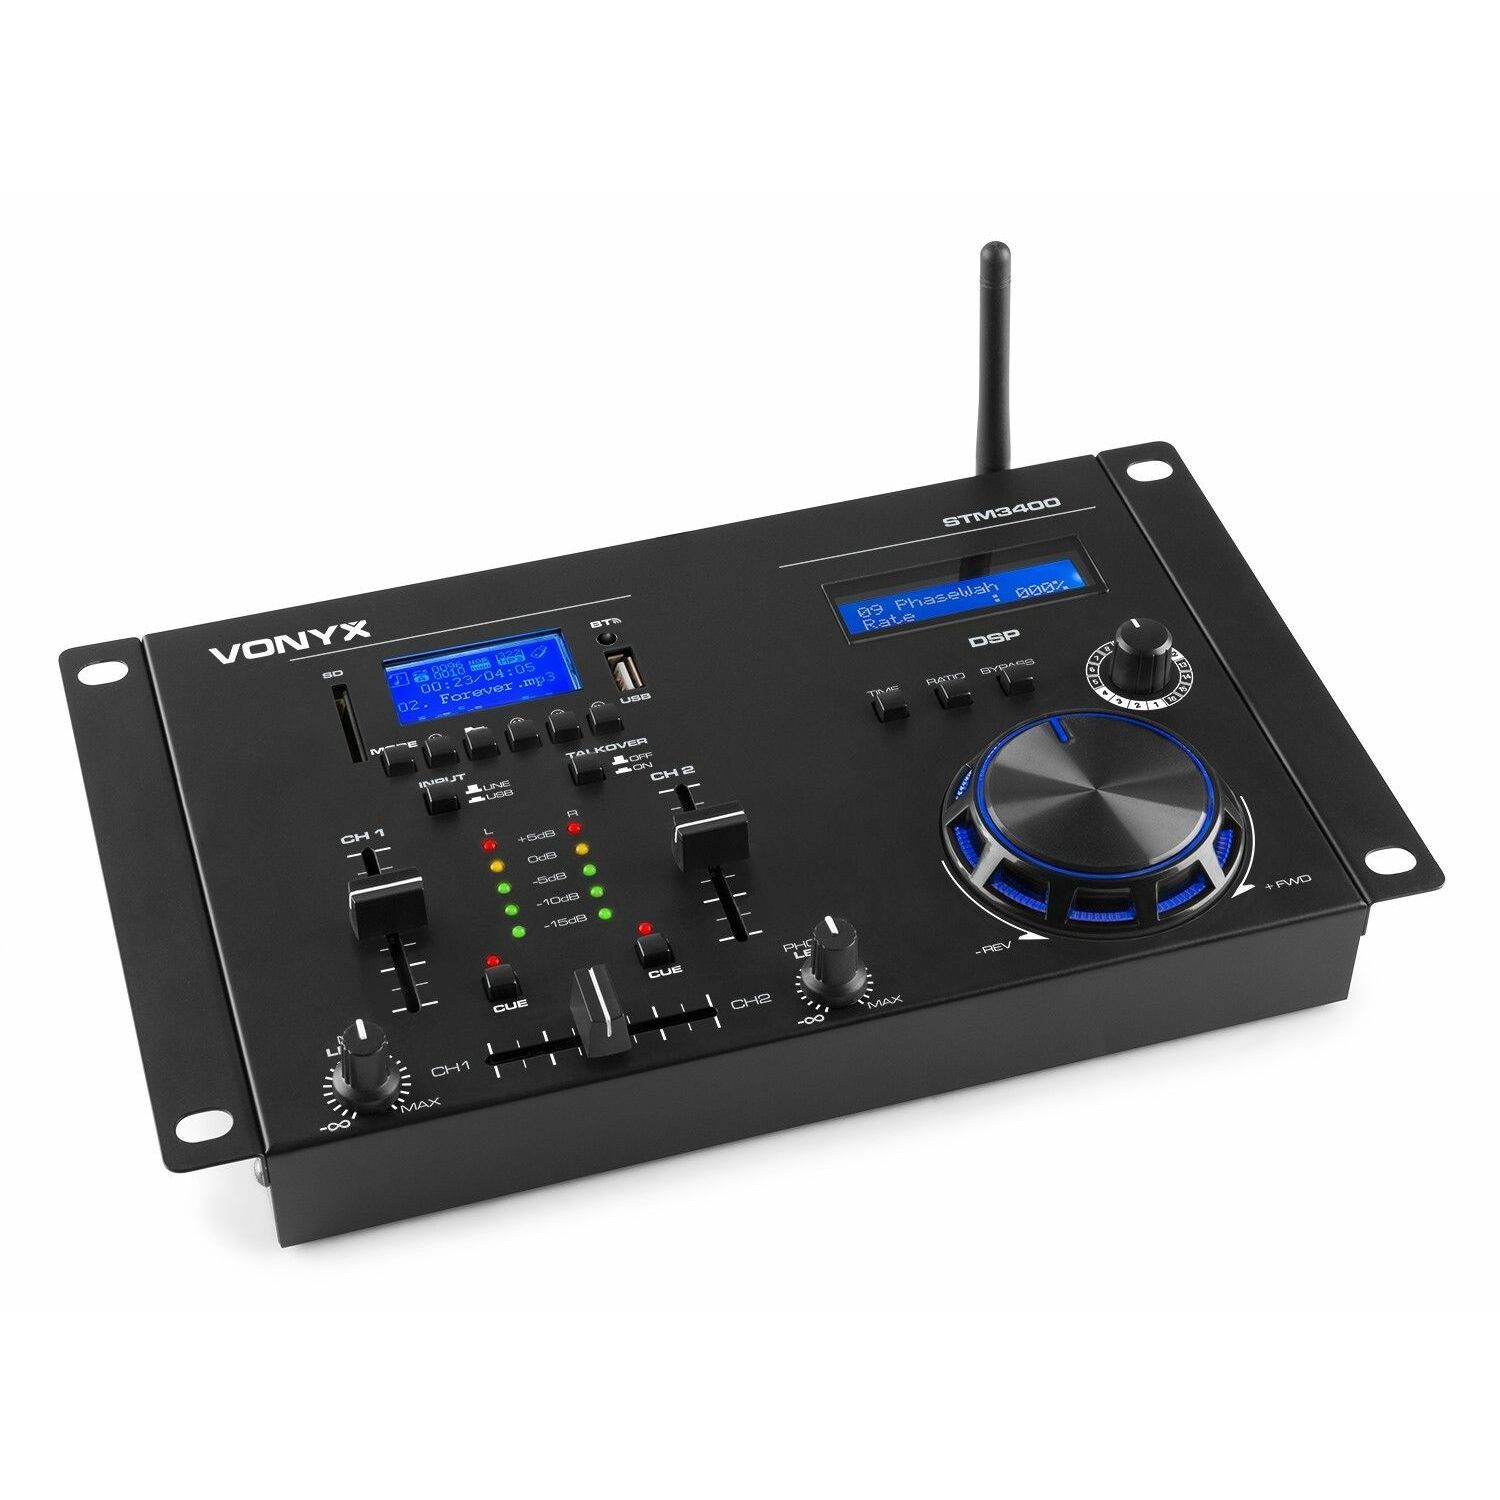 Retourdeal - Vonyx STM3400 mixer met scratch, Bluetooth en mp3